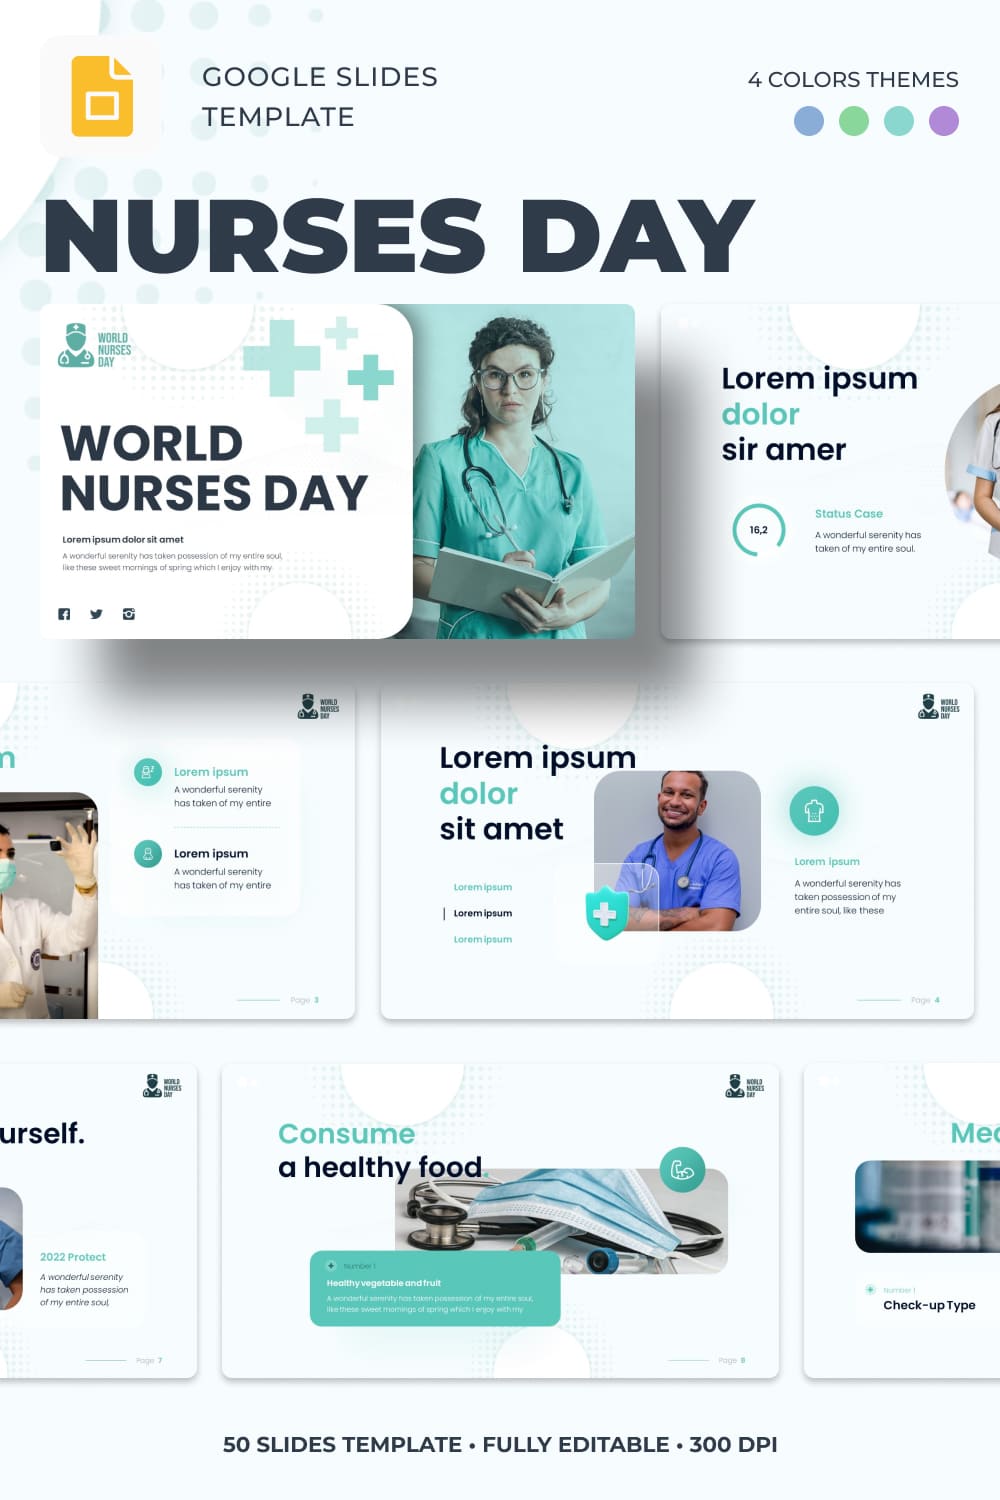 Nurses Day Google Slides Theme - pinterest image preview.